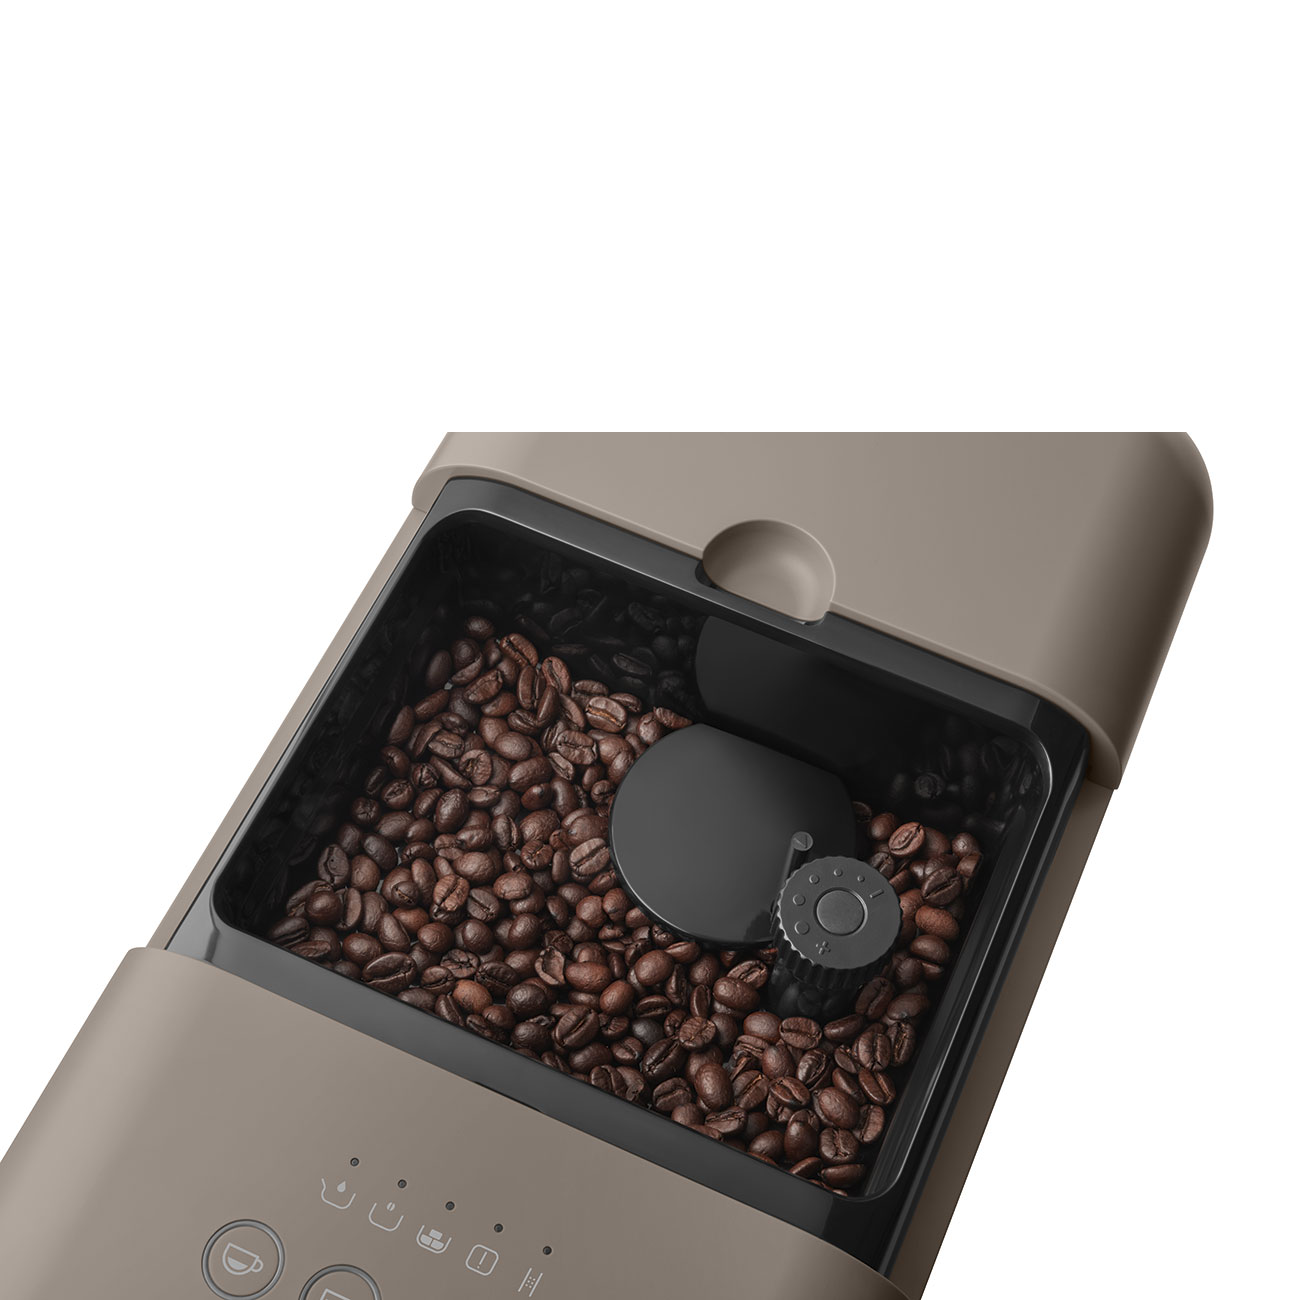 cafetera marrón taupe SMEG deposito granos café automática Espresso diseño calidad molinillo café